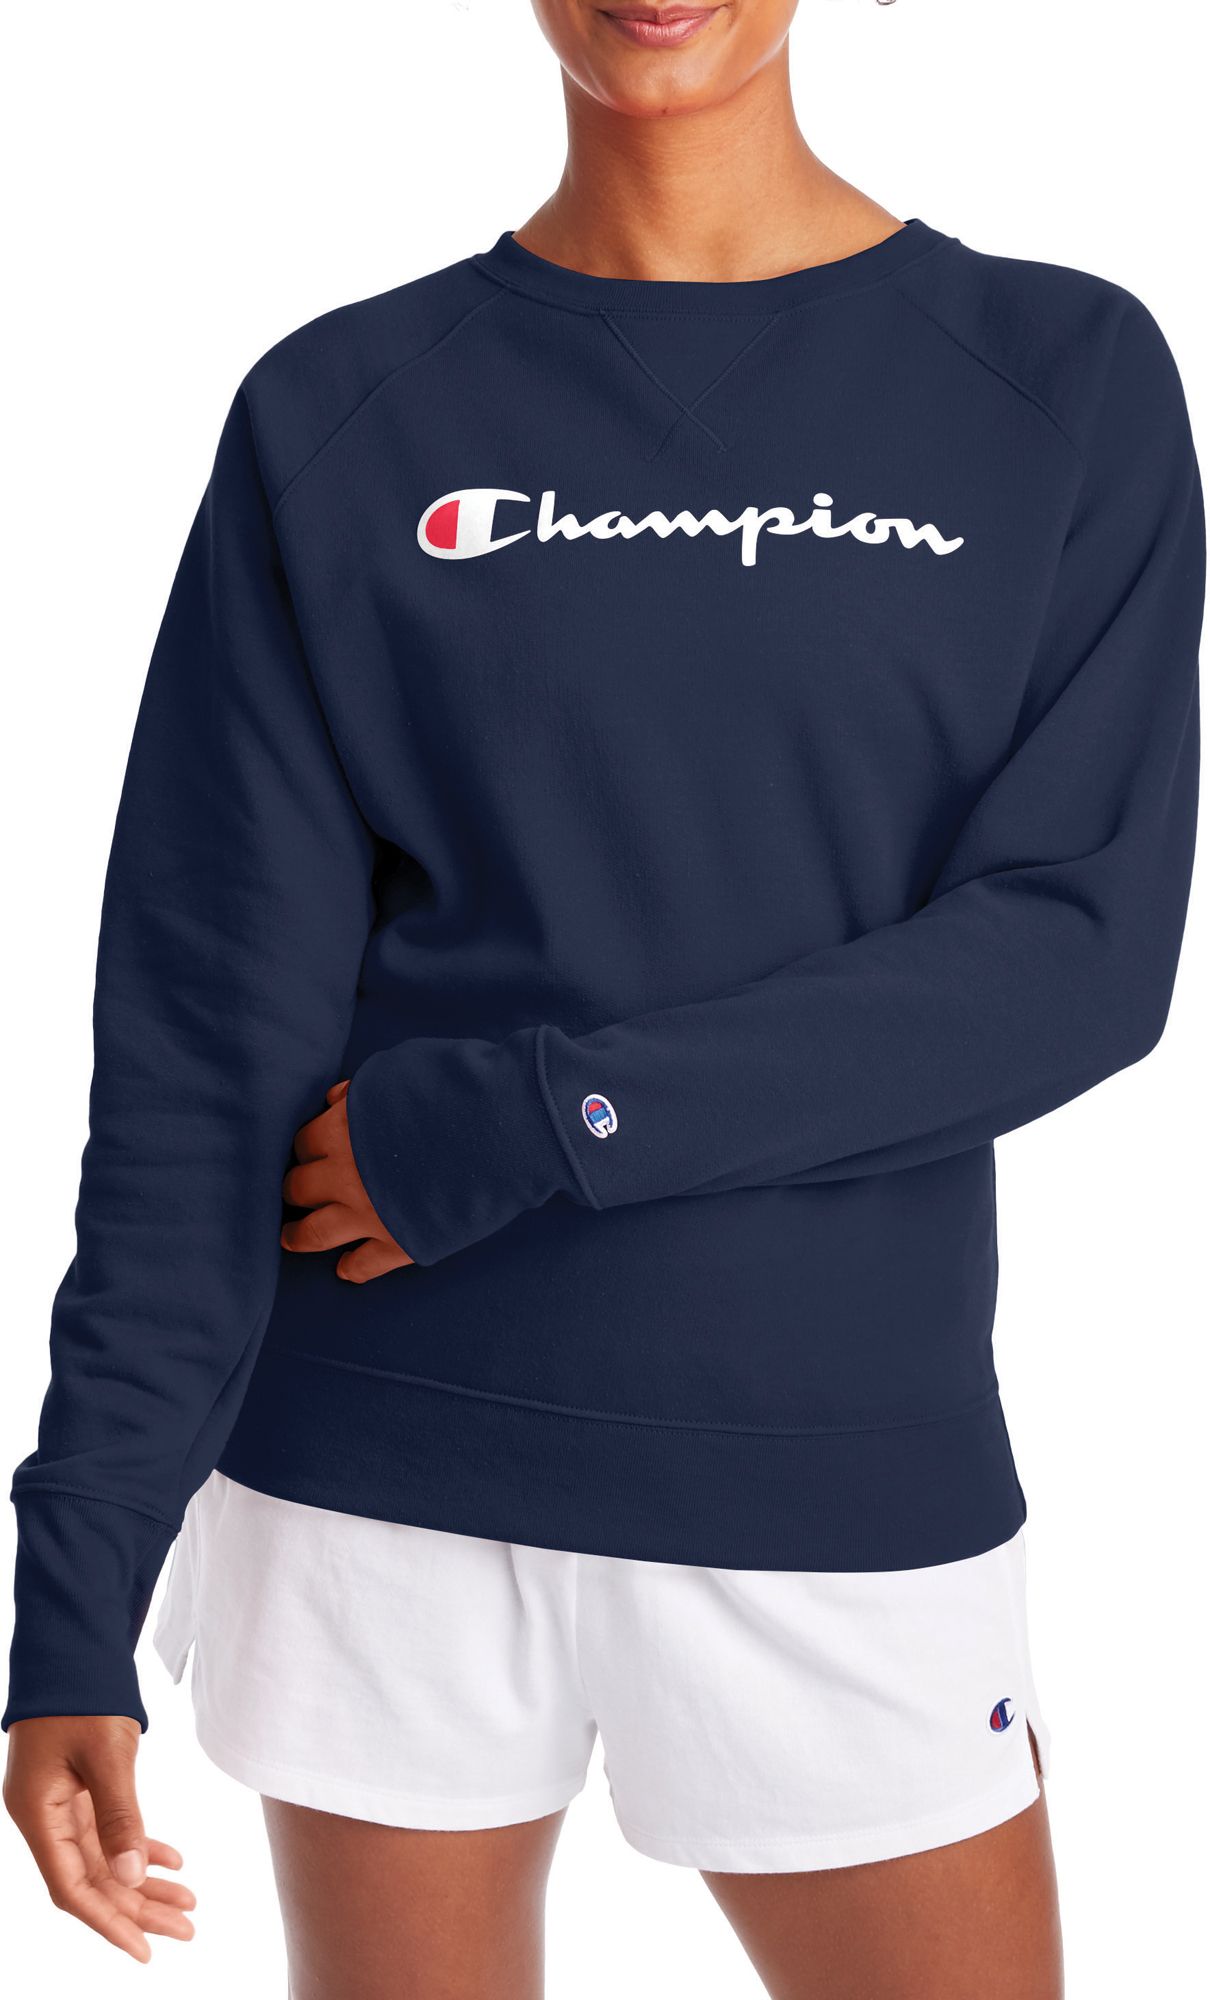 champion script logo sweatshirt